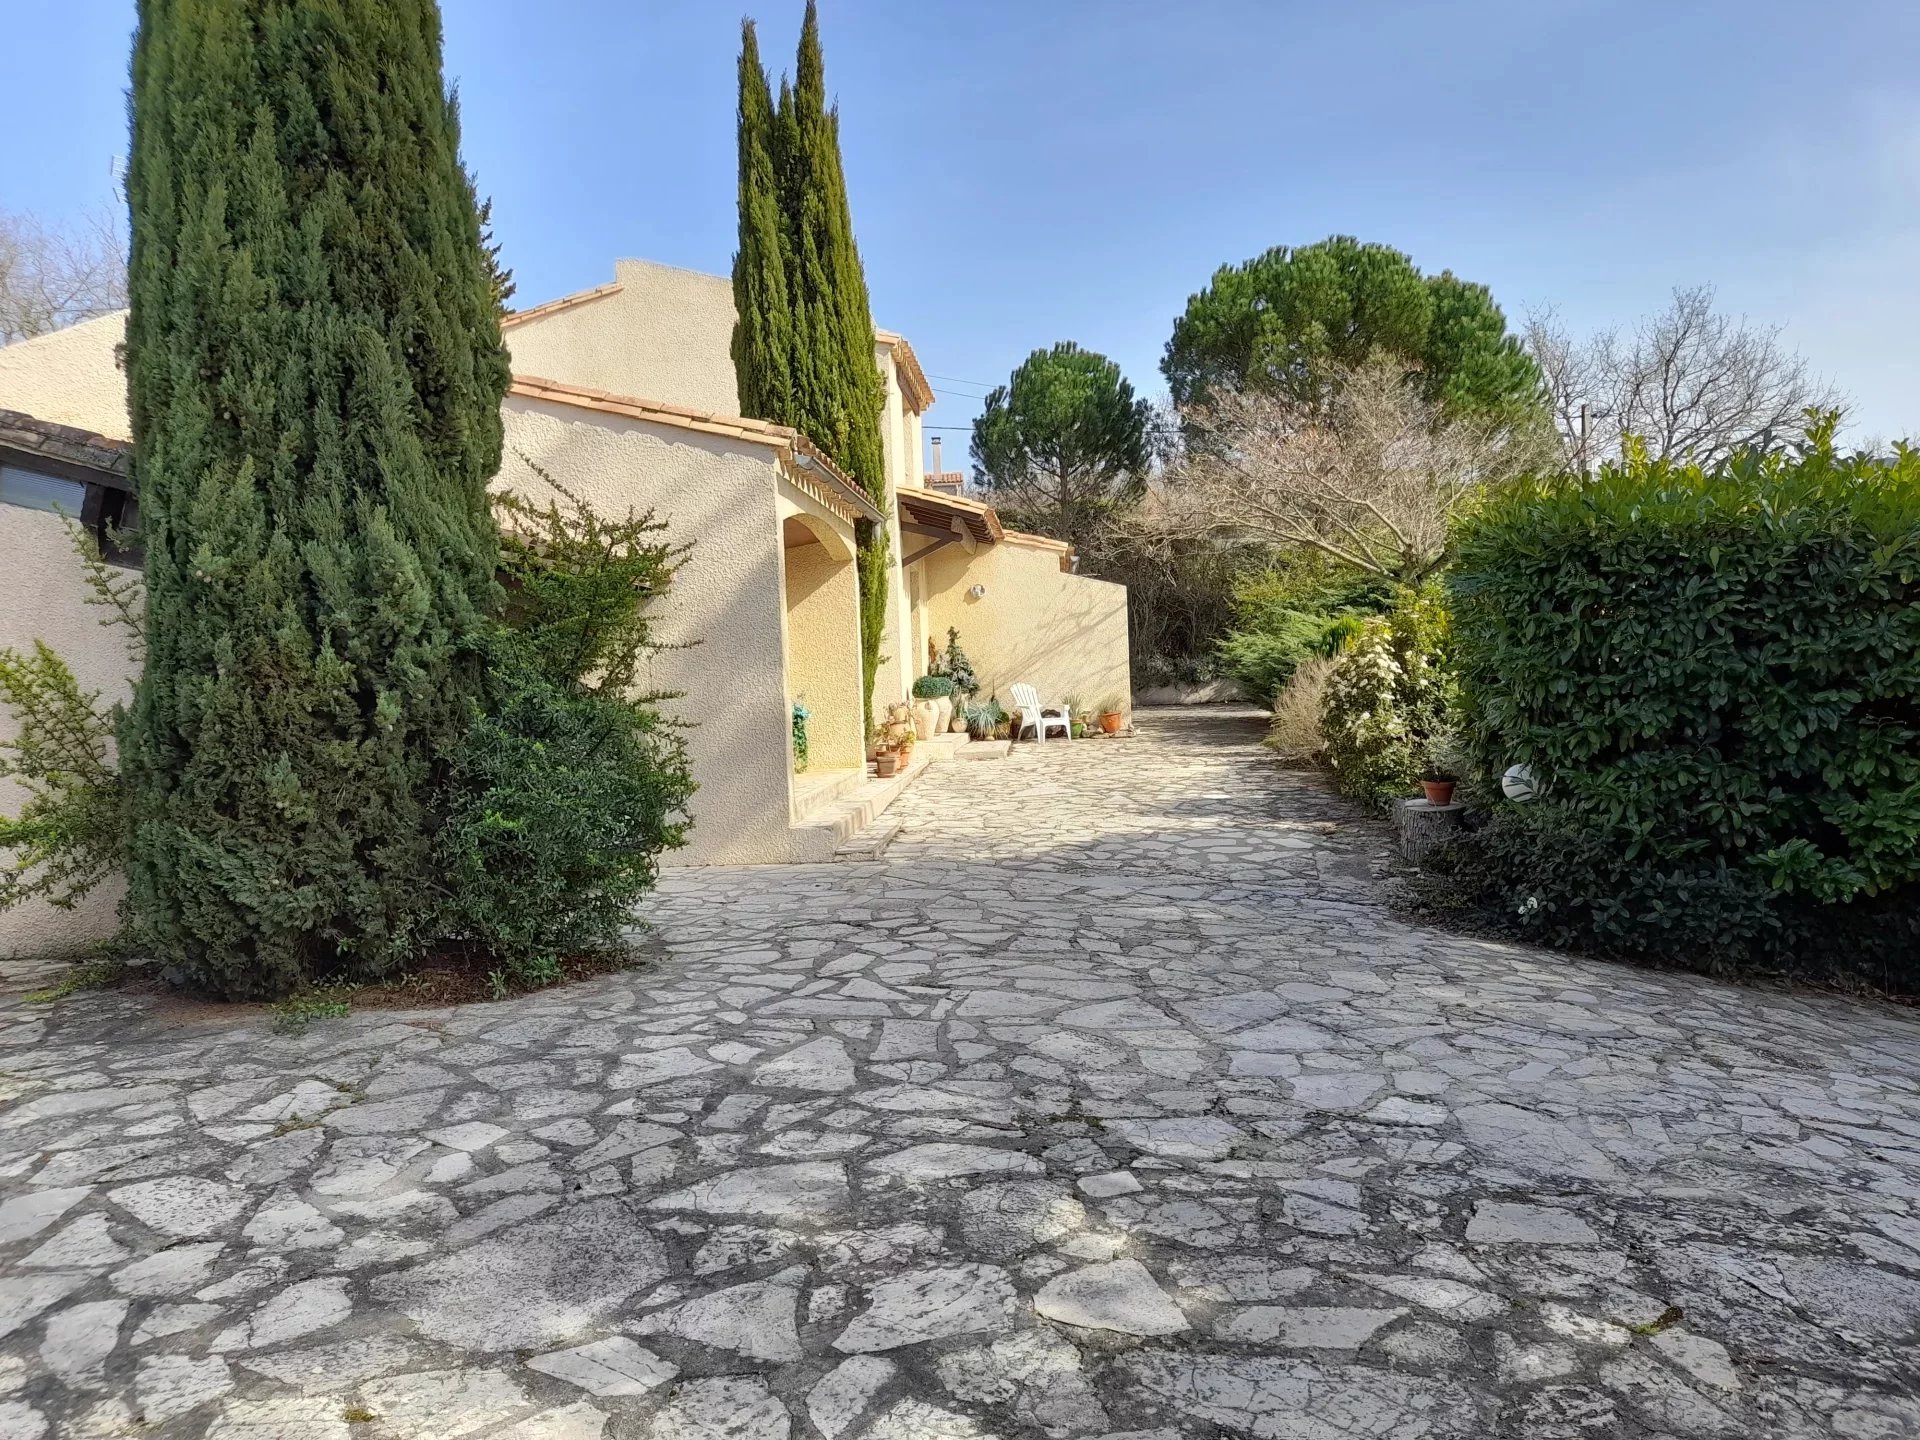 Mediterranean villa, garden and commanding views